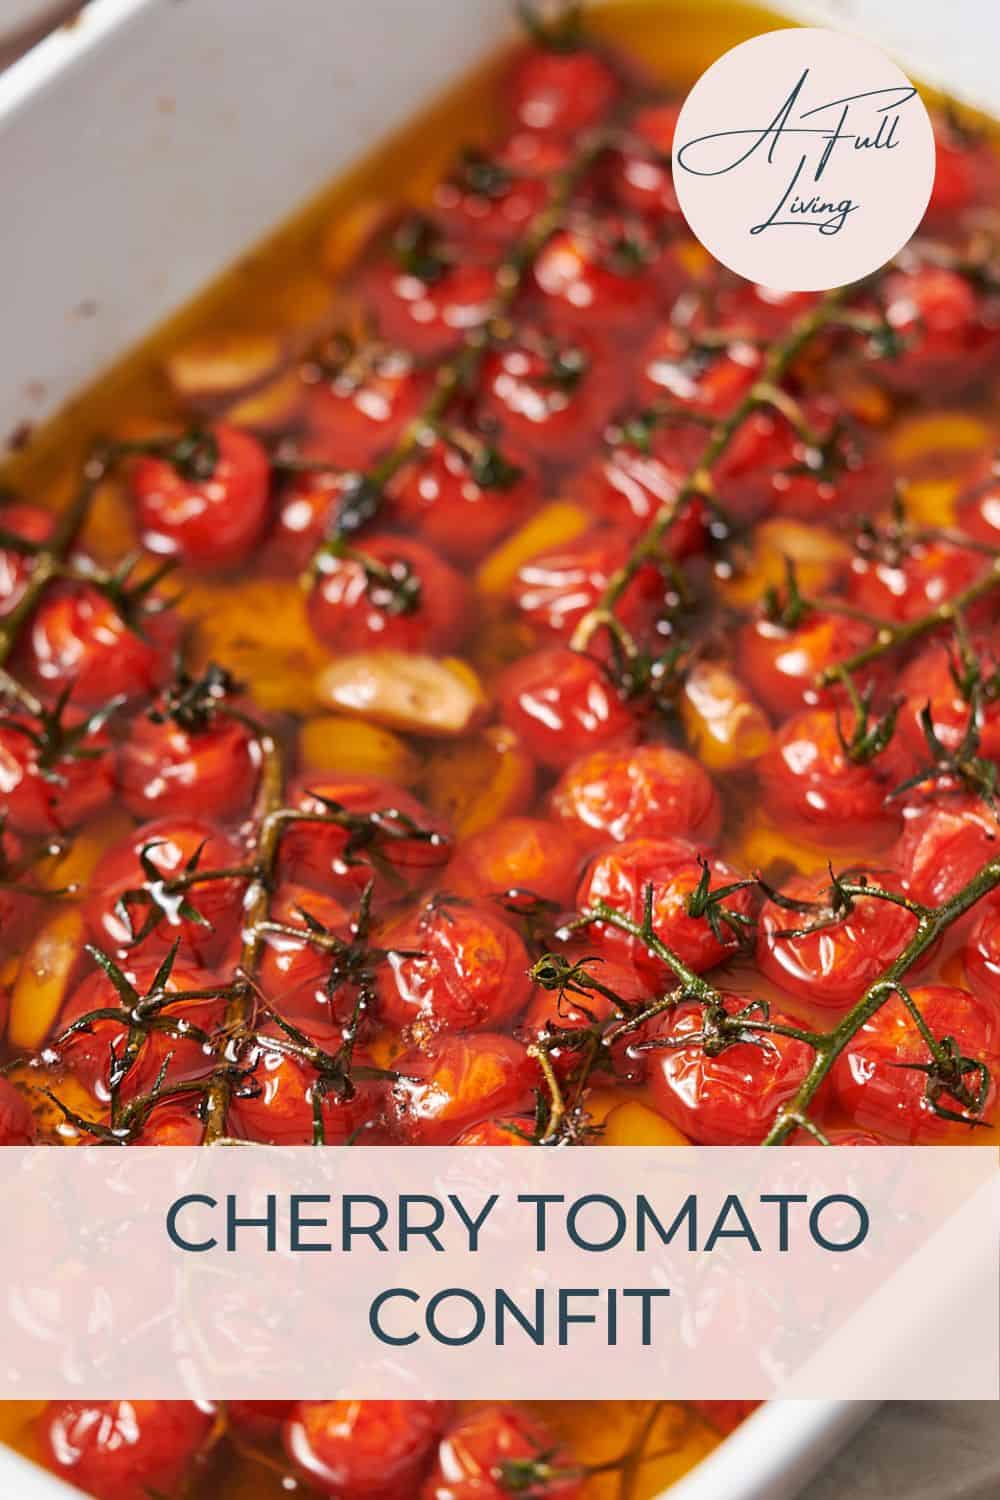 Cherry tomato confit